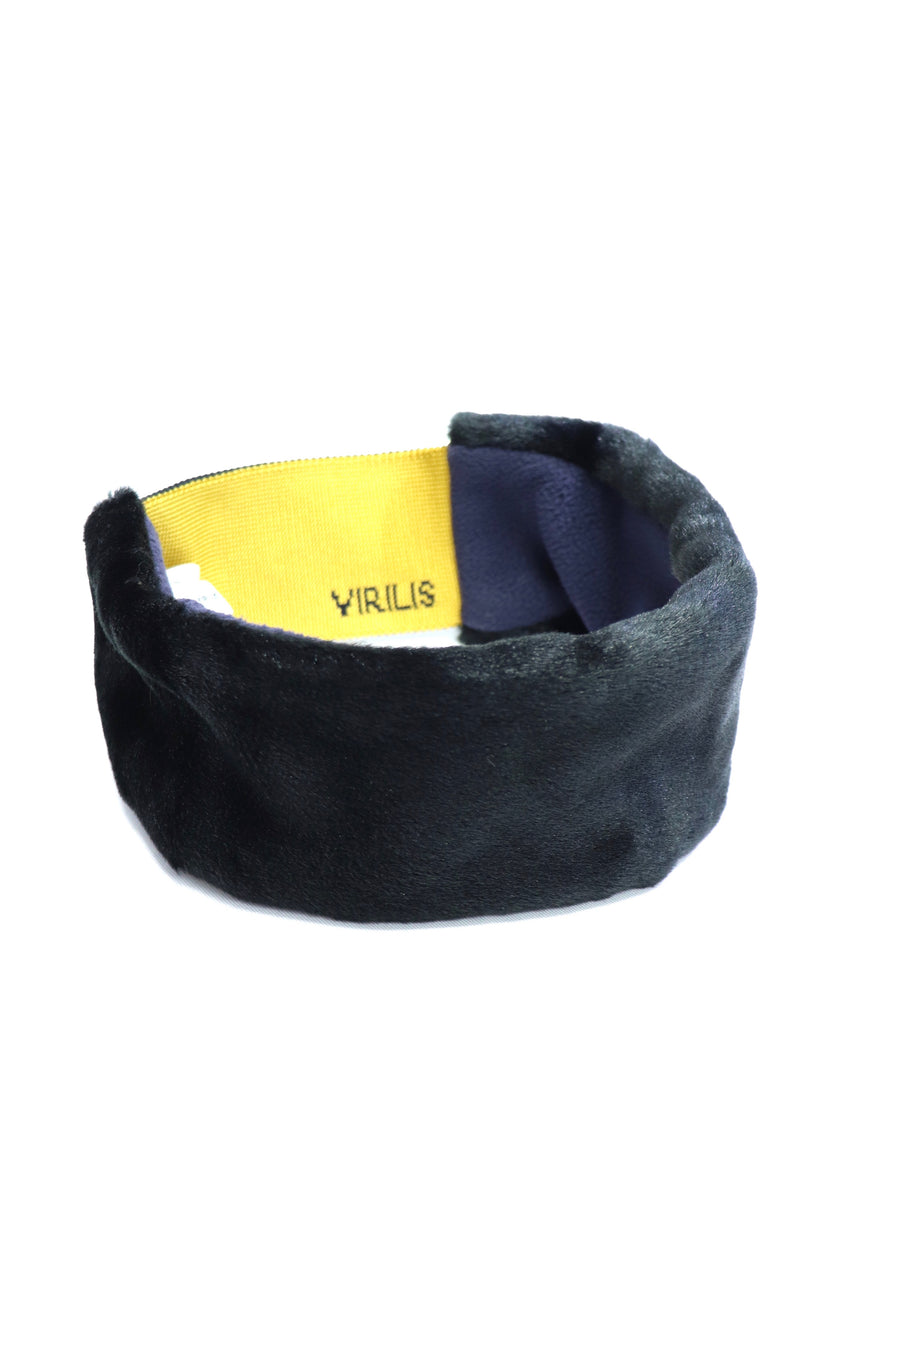 TOGA VIRILIS  Fake fur hand accessory(BLACK)